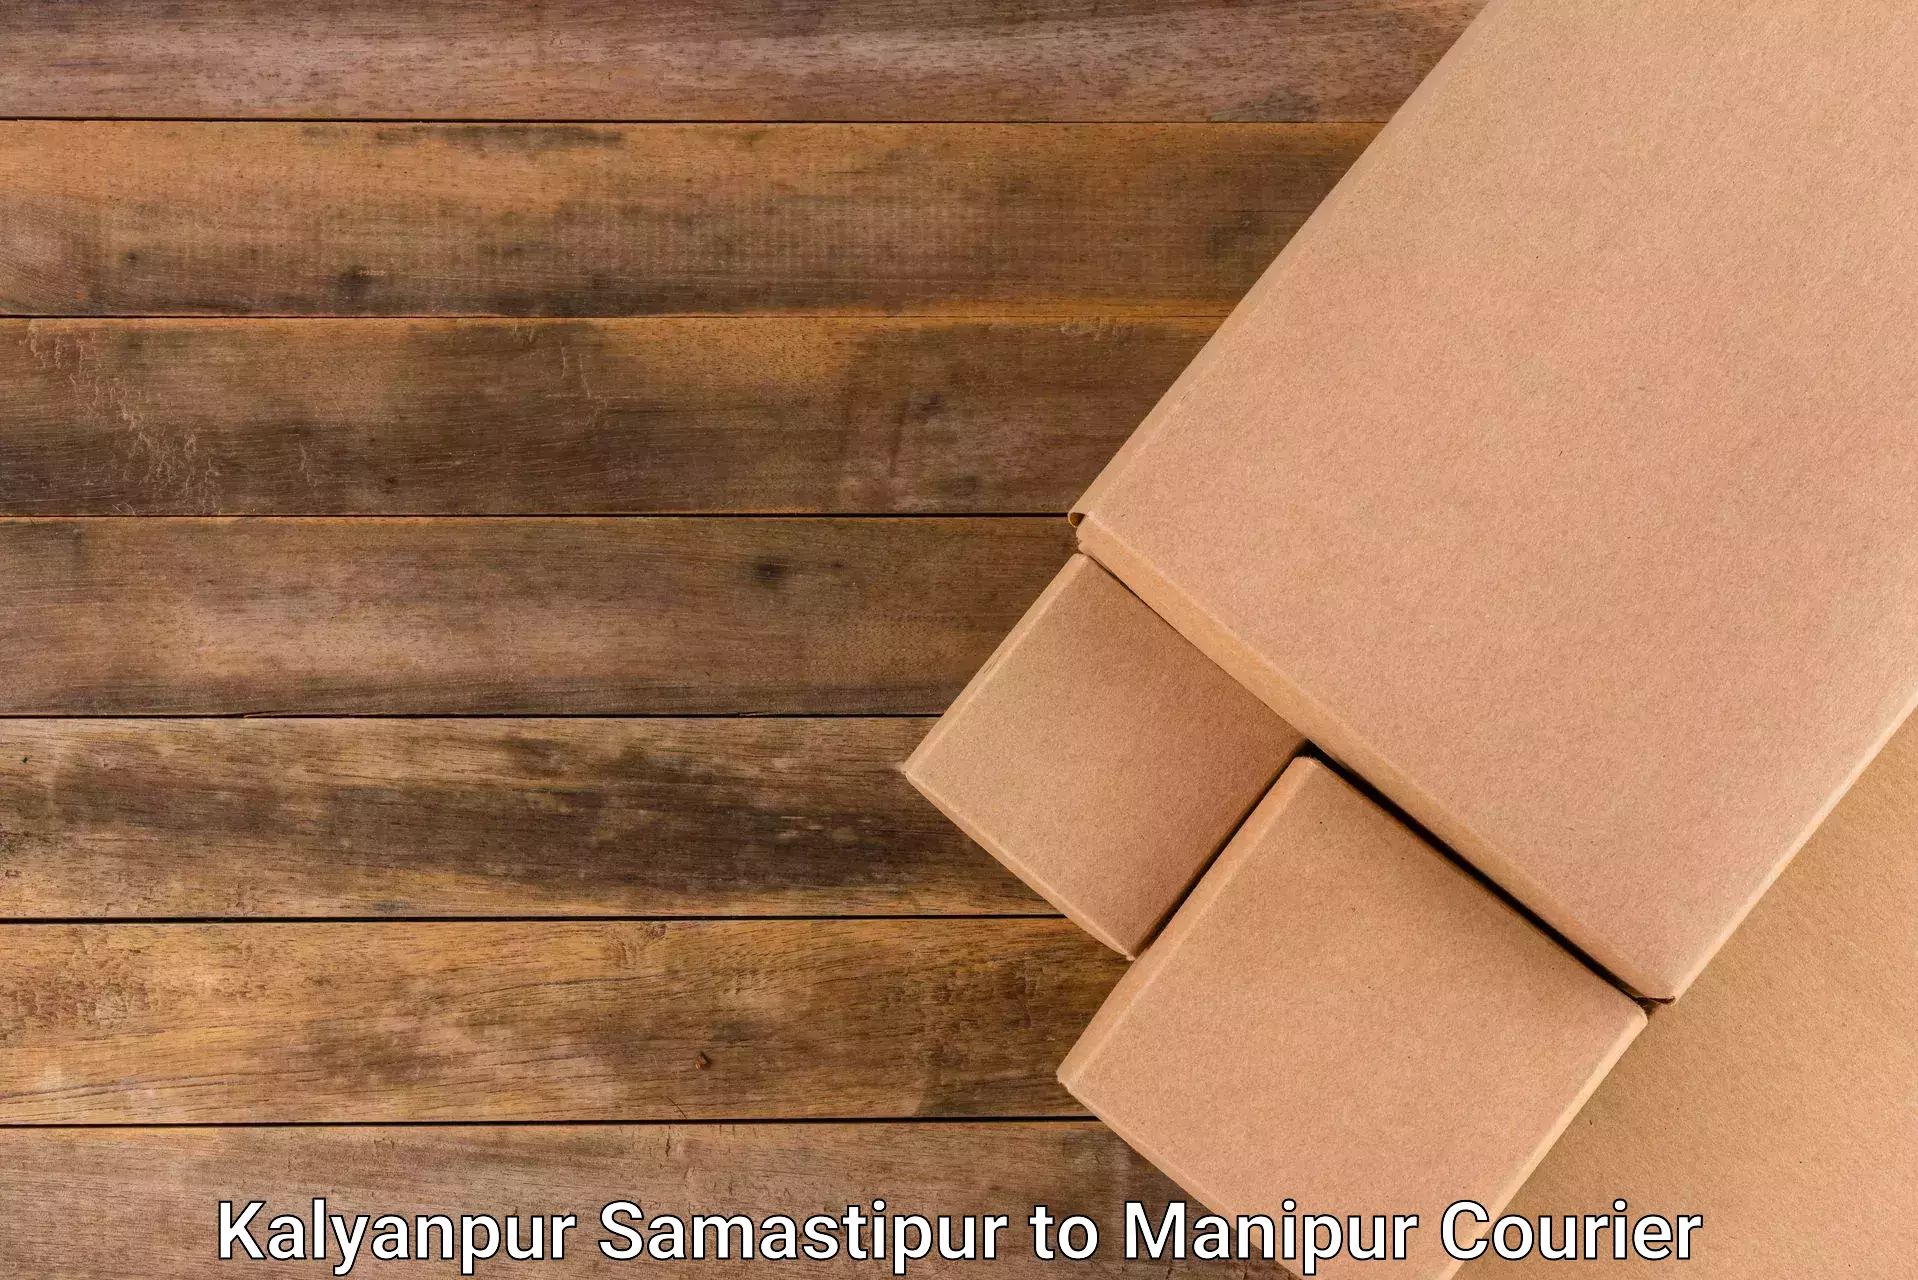 Express delivery network Kalyanpur Samastipur to Kanti